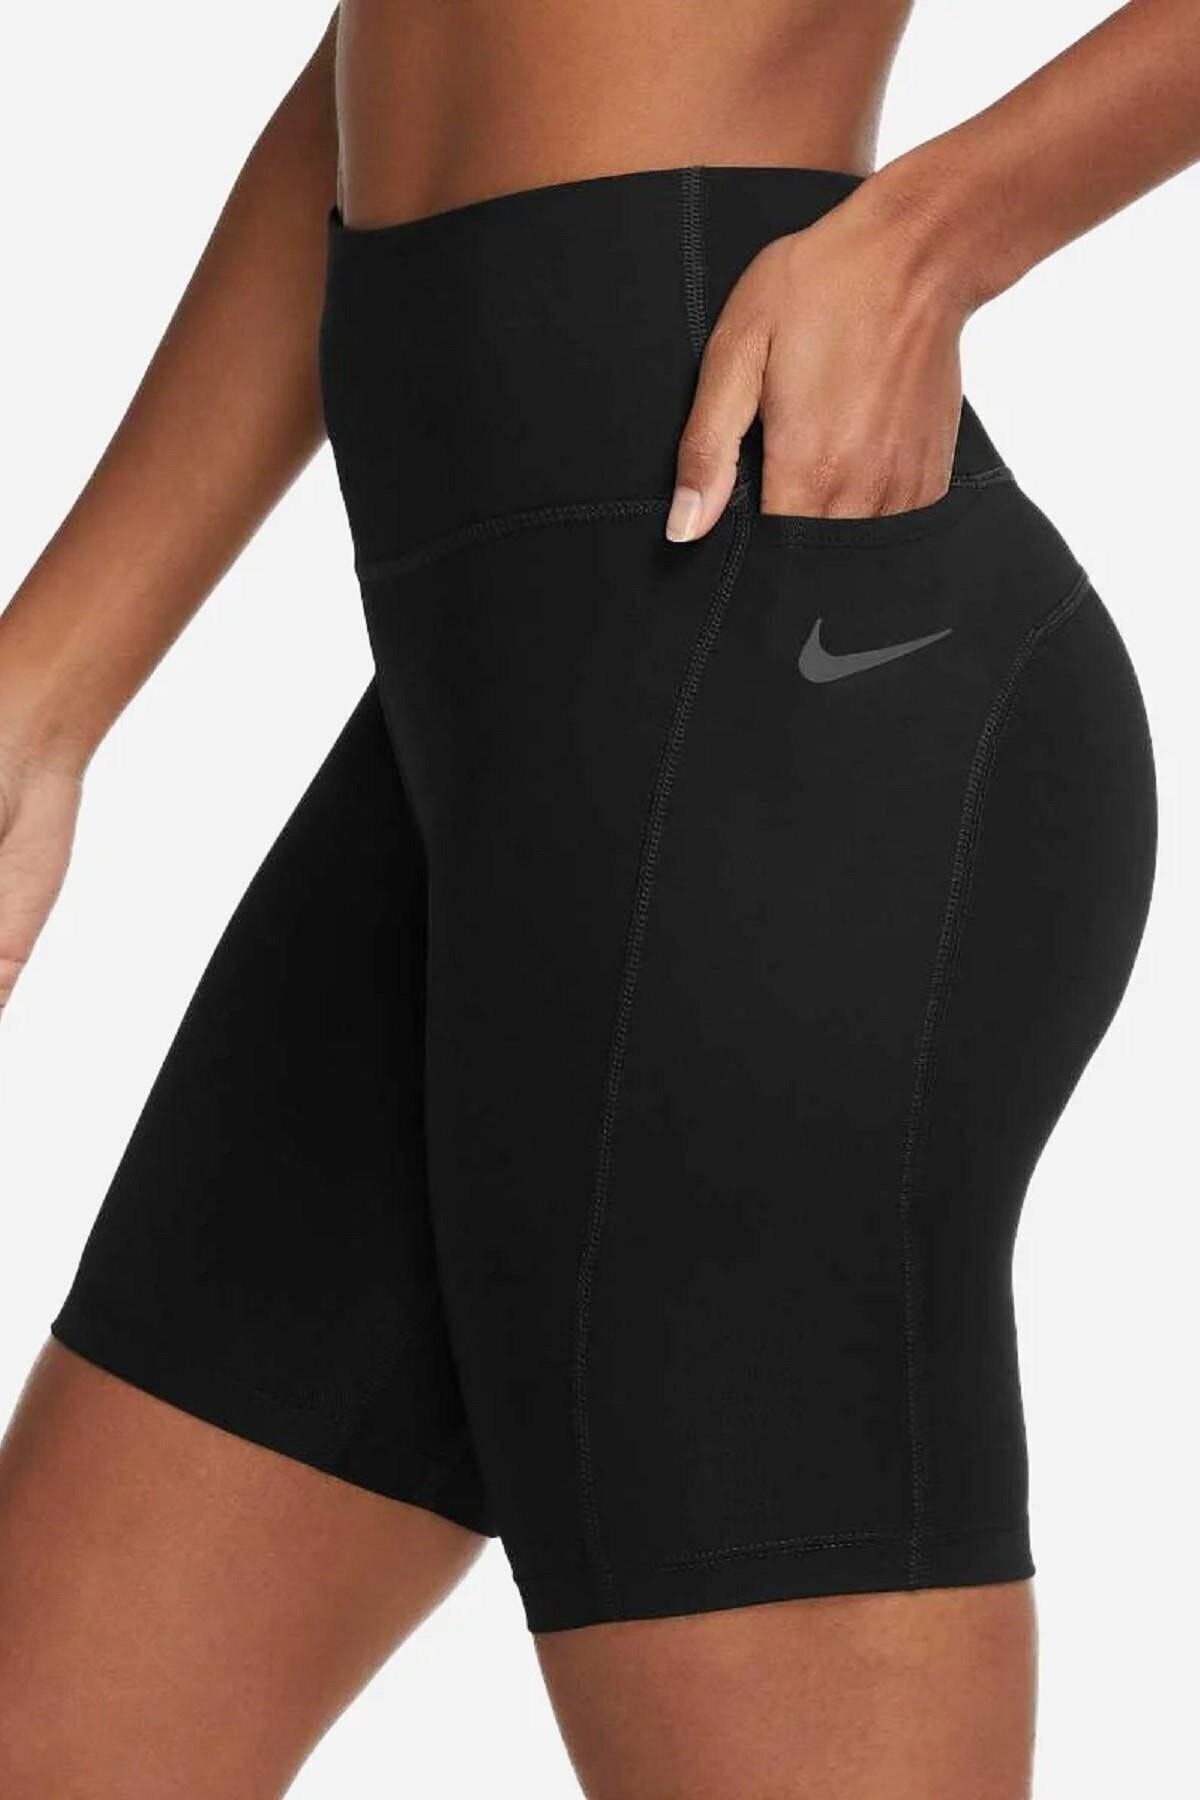 Nike Epic Fast Women's 7 Running Yüksek Belli Shorts/tayt, Biker Tayt.